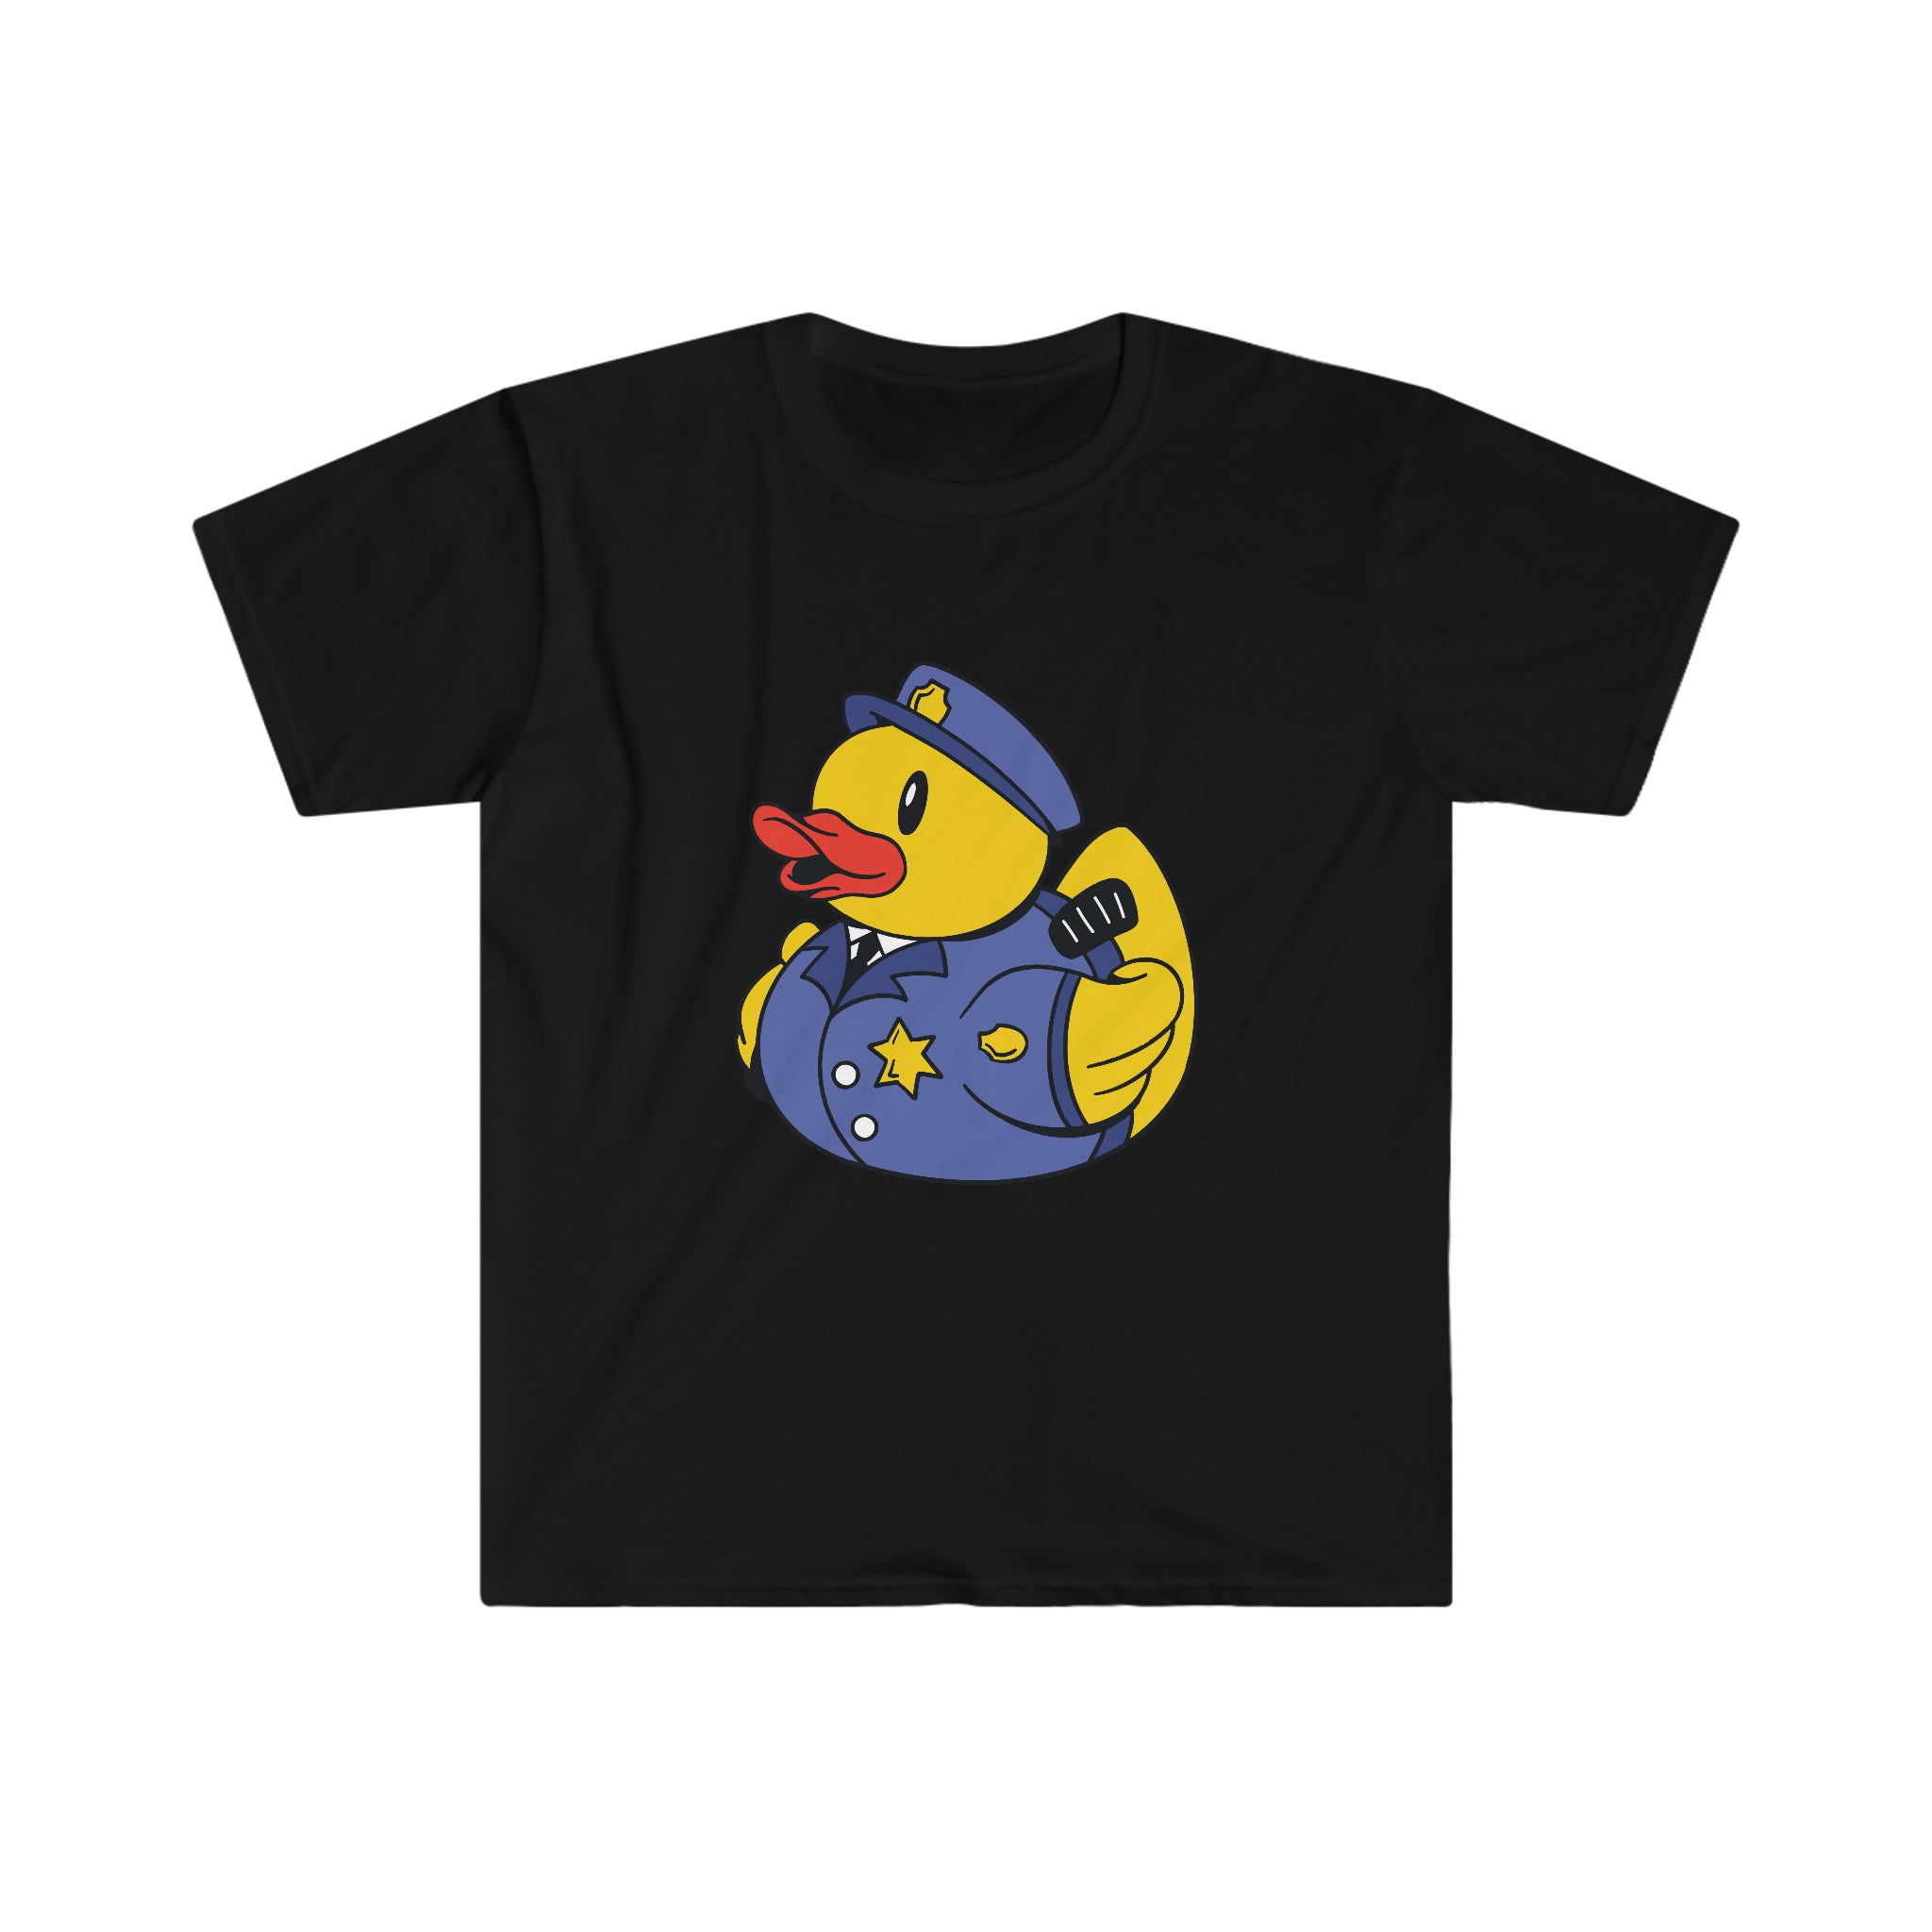 A stylish black Police Duck T-Shirt featuring a cartoon duck design.